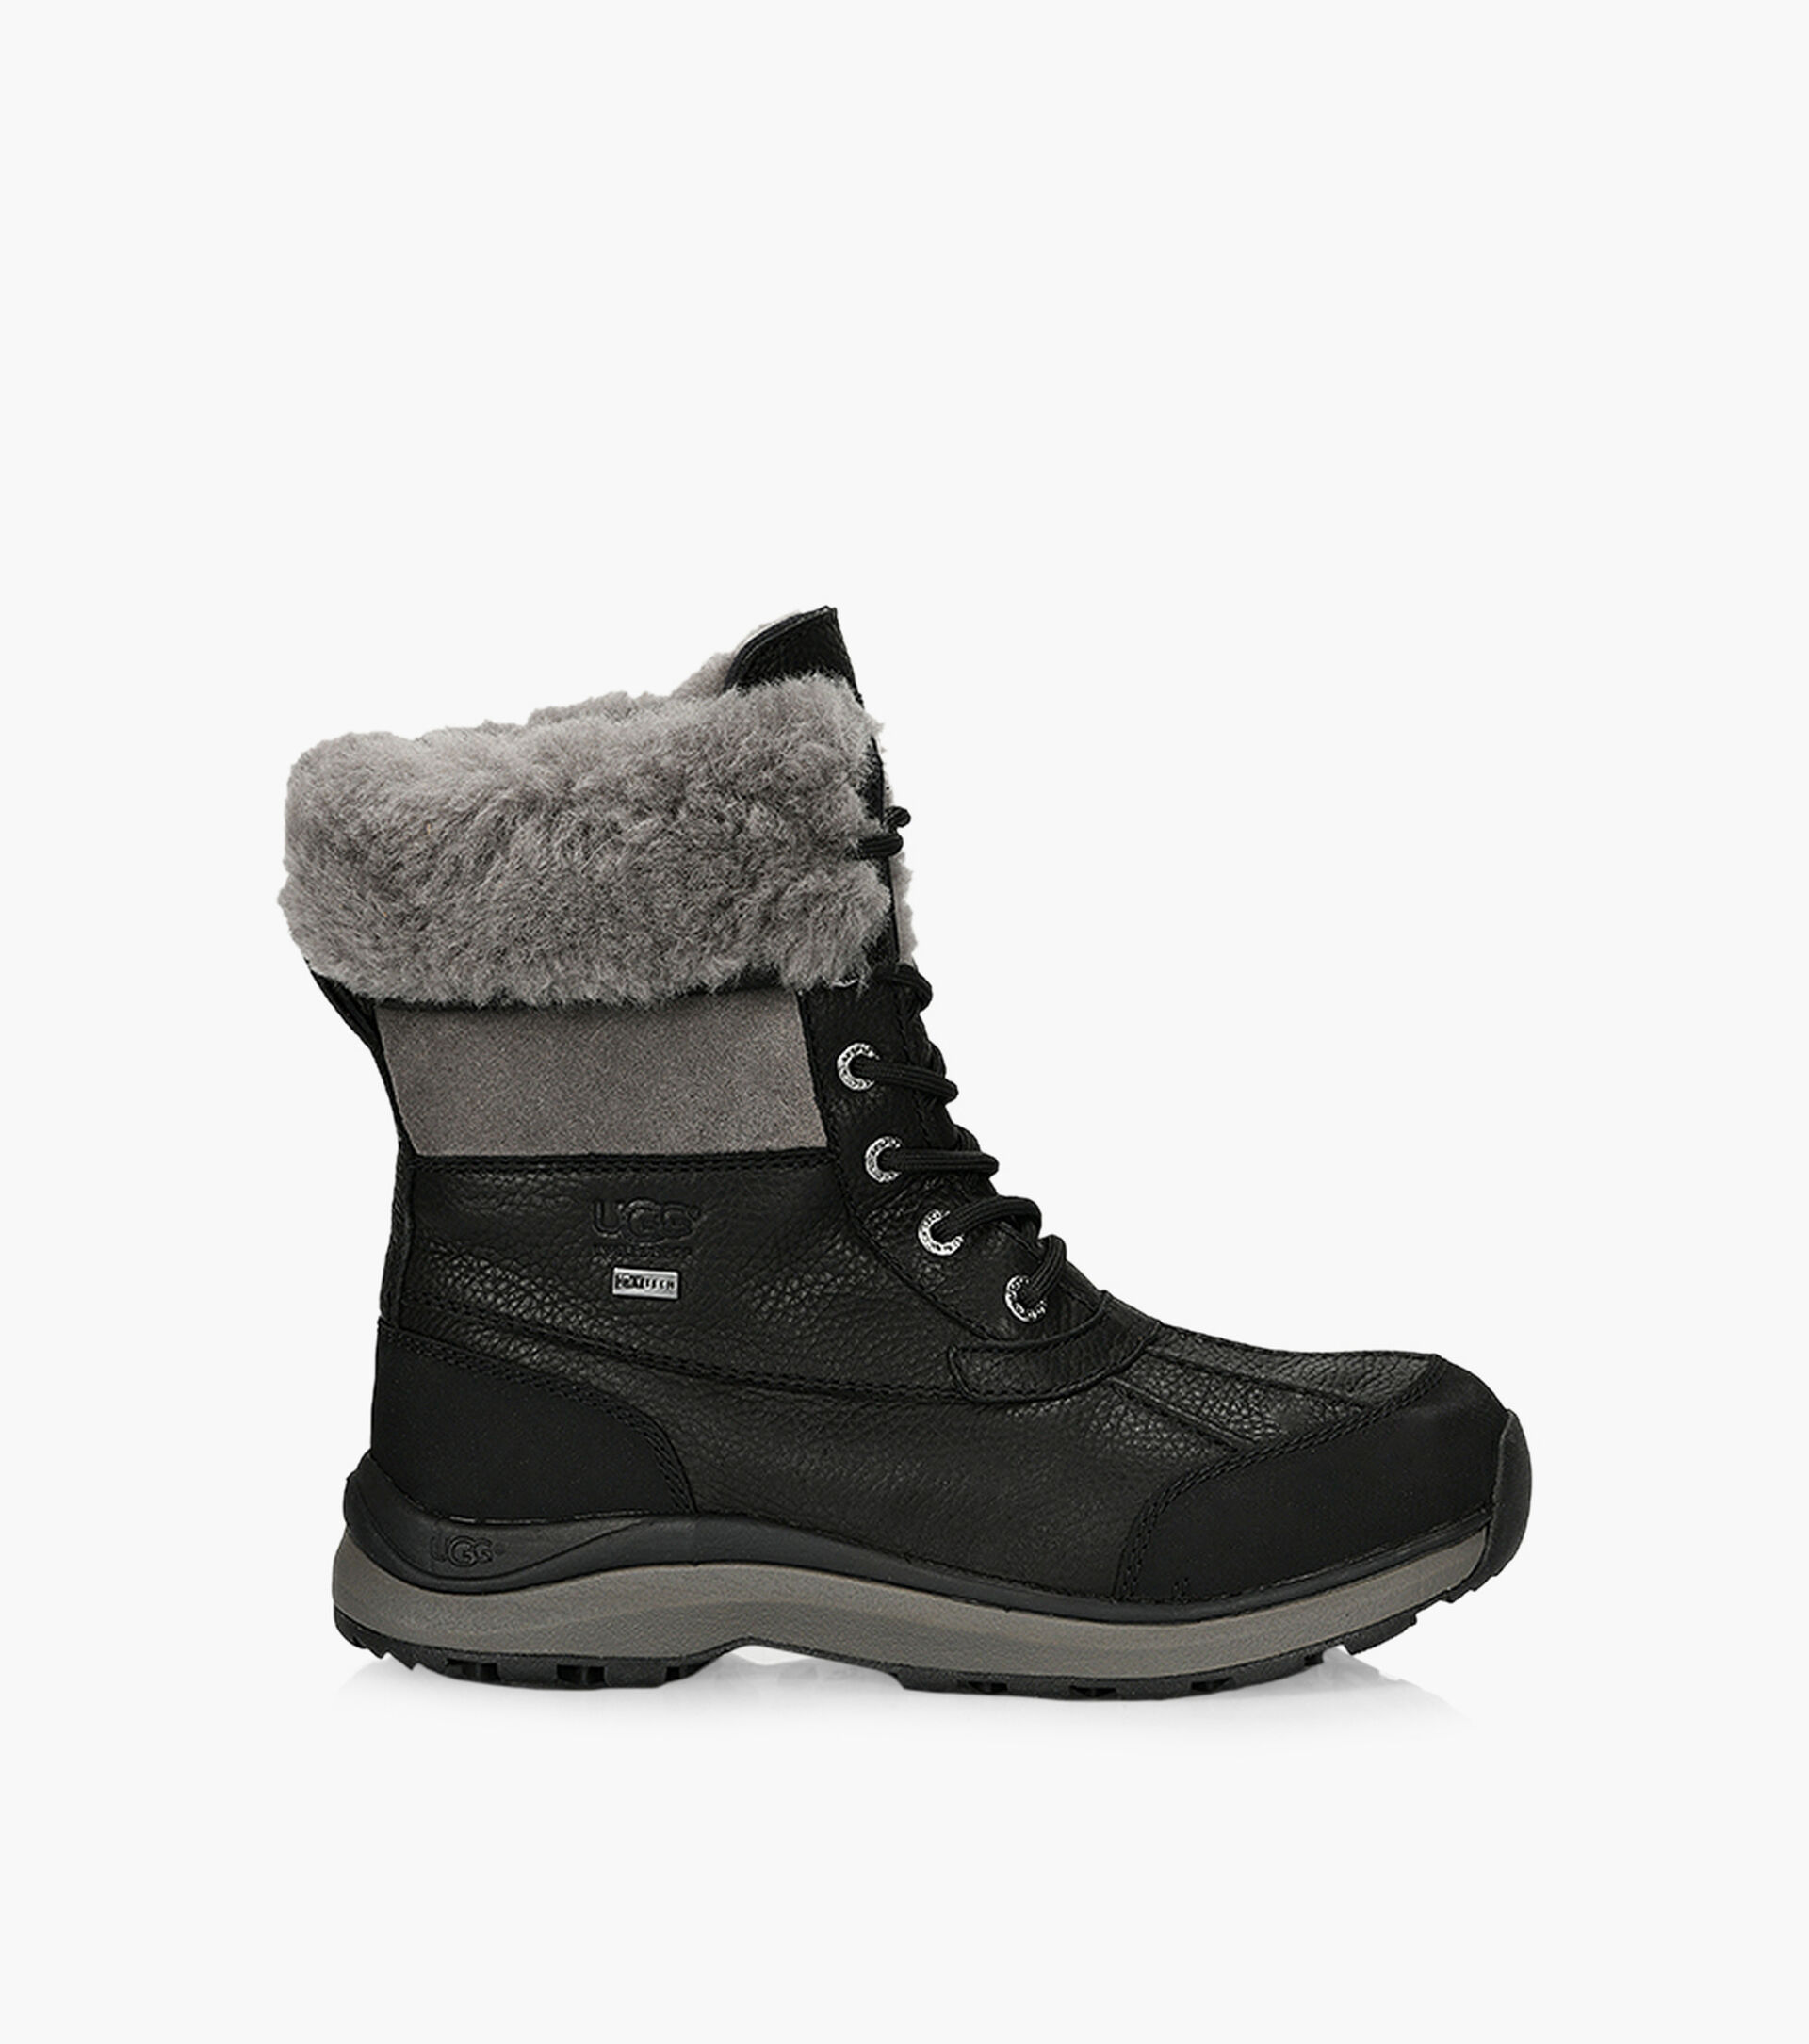 UGG ADIRONDACK BOOT III - Black Leather | Browns Shoes